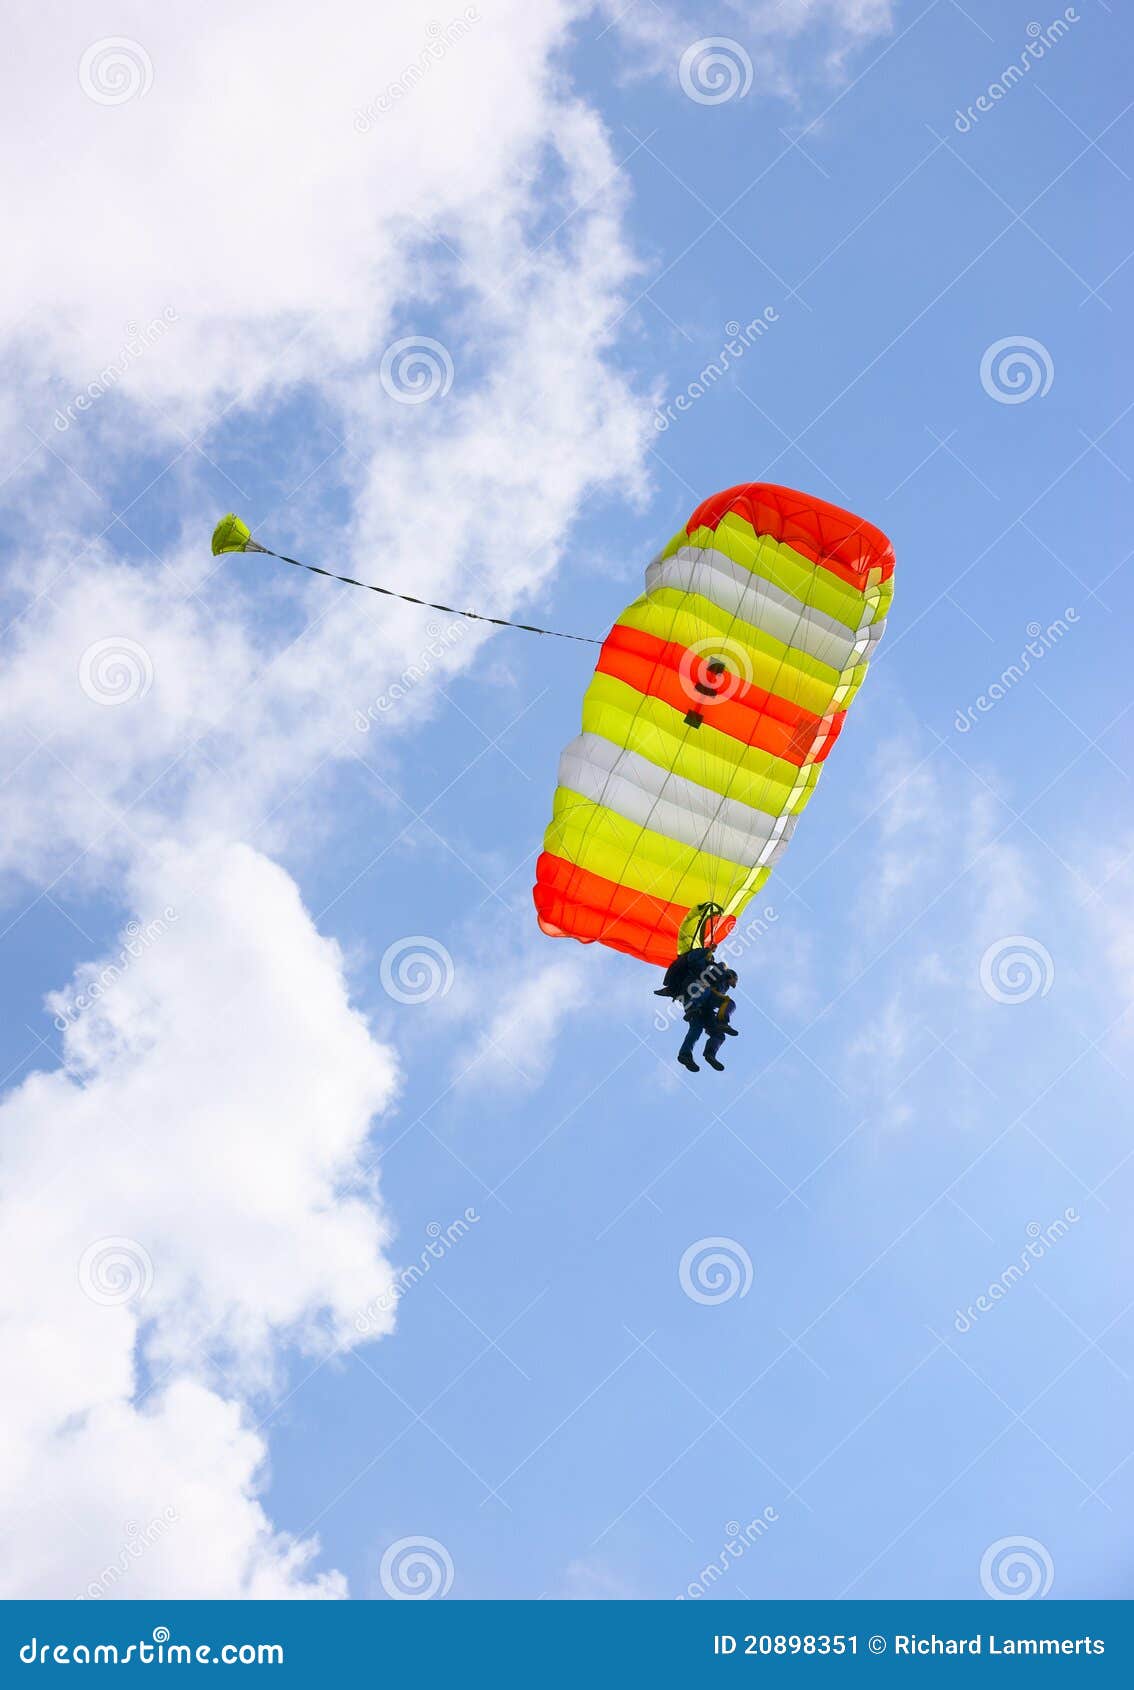 tandem skydive parachute